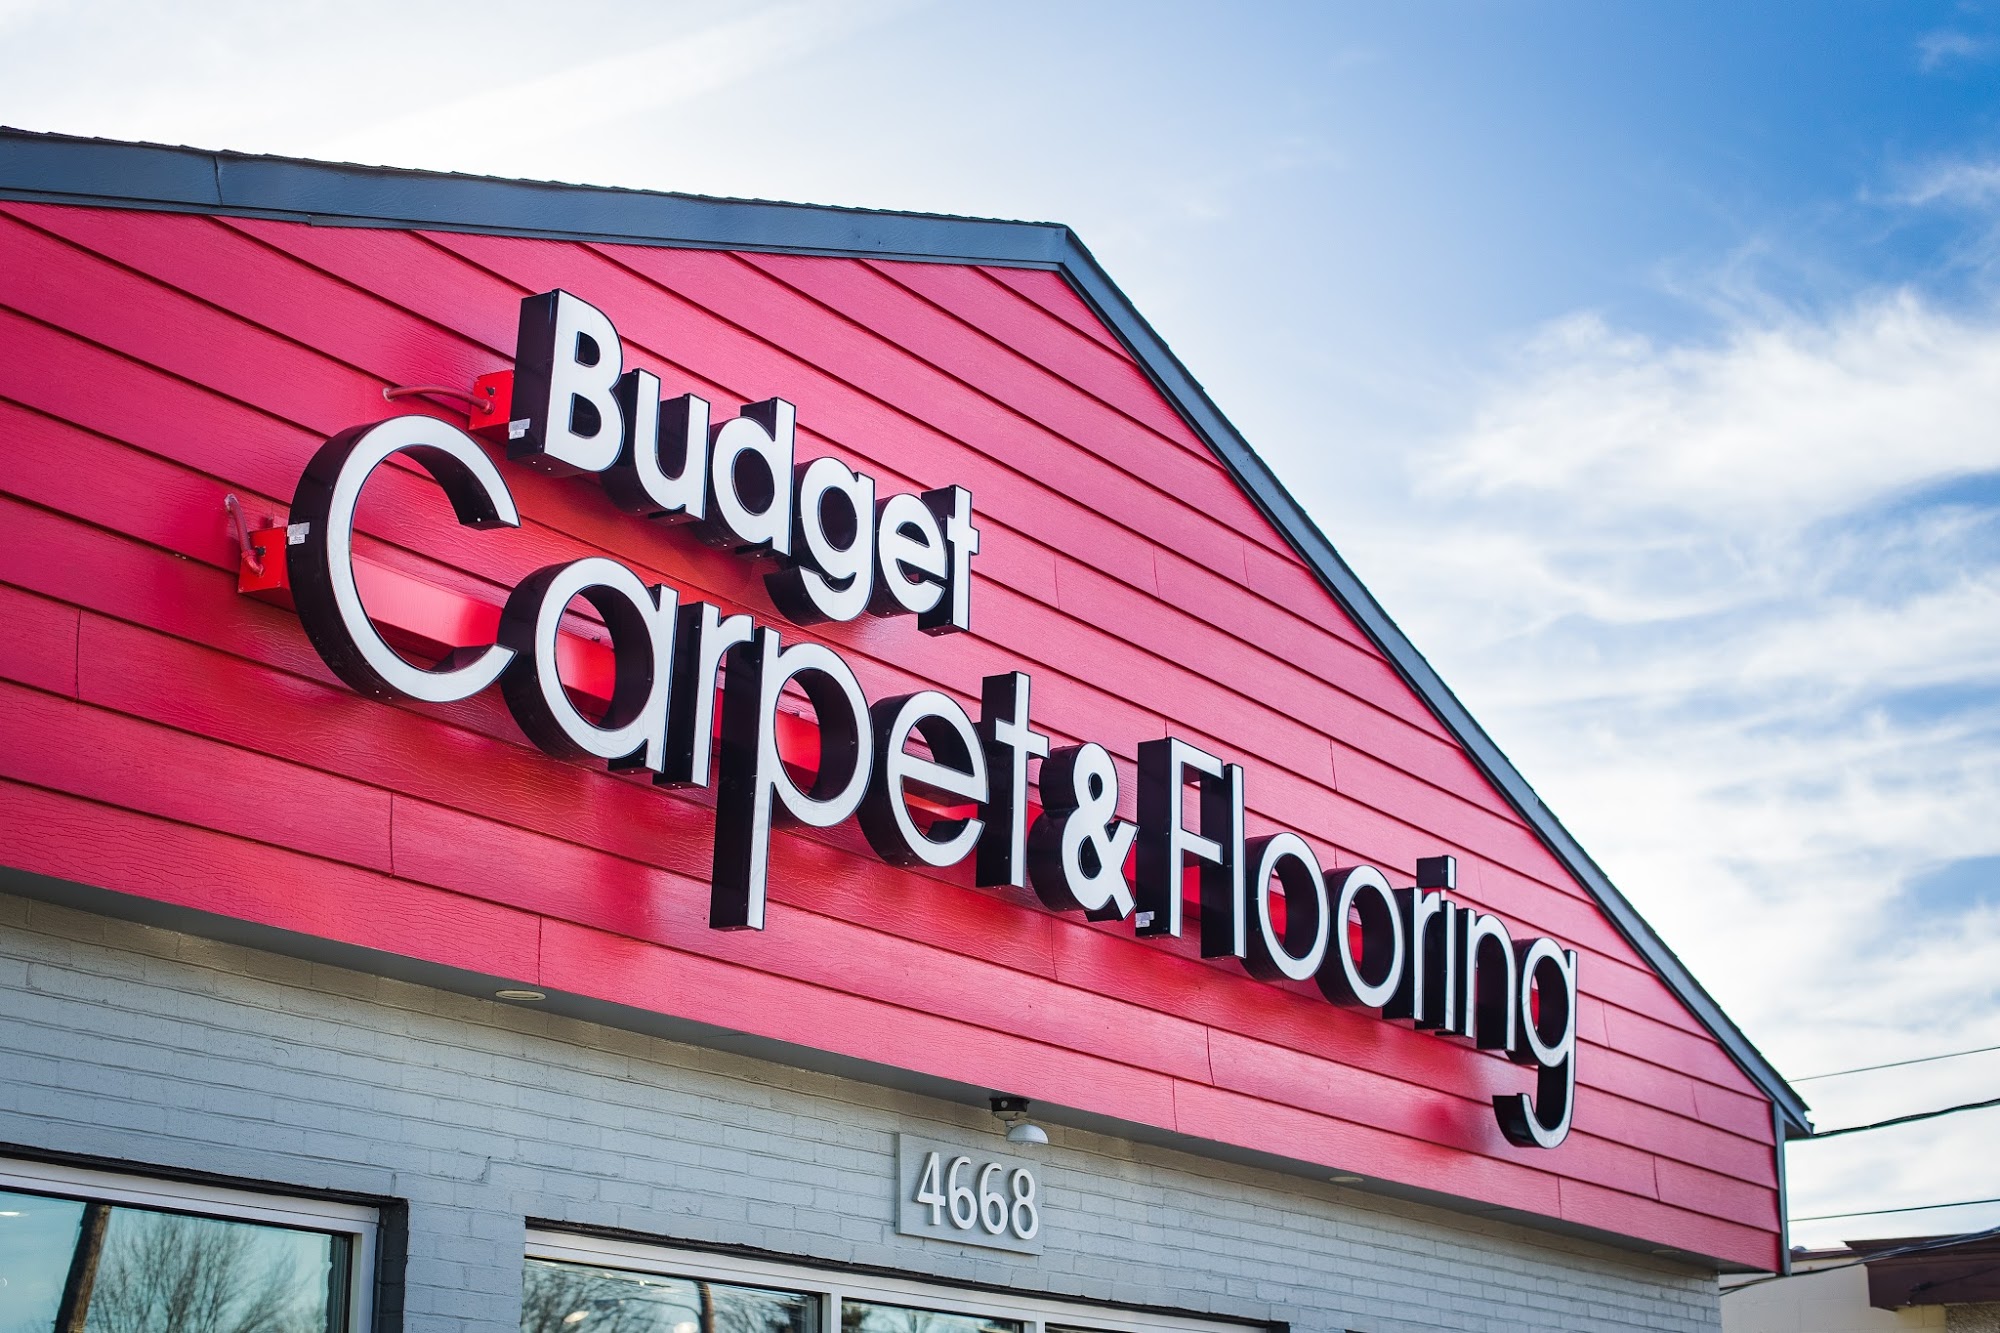 Budget Carpet & Flooring